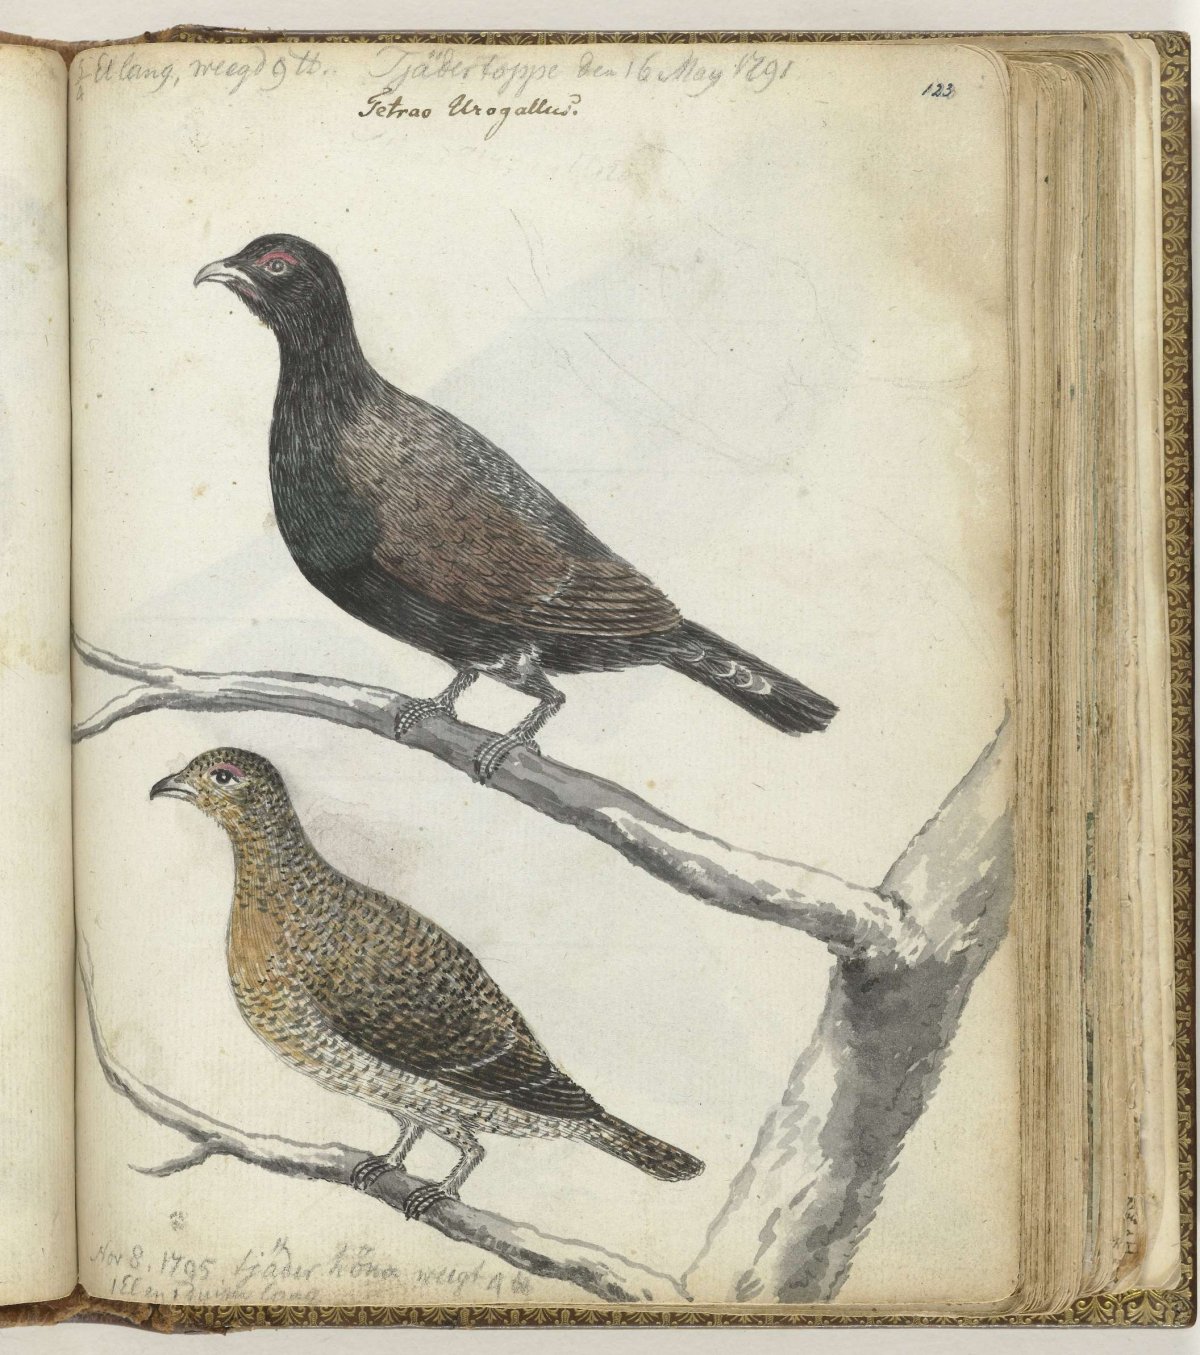 Zweedse vogels, Jan Brandes, 1795